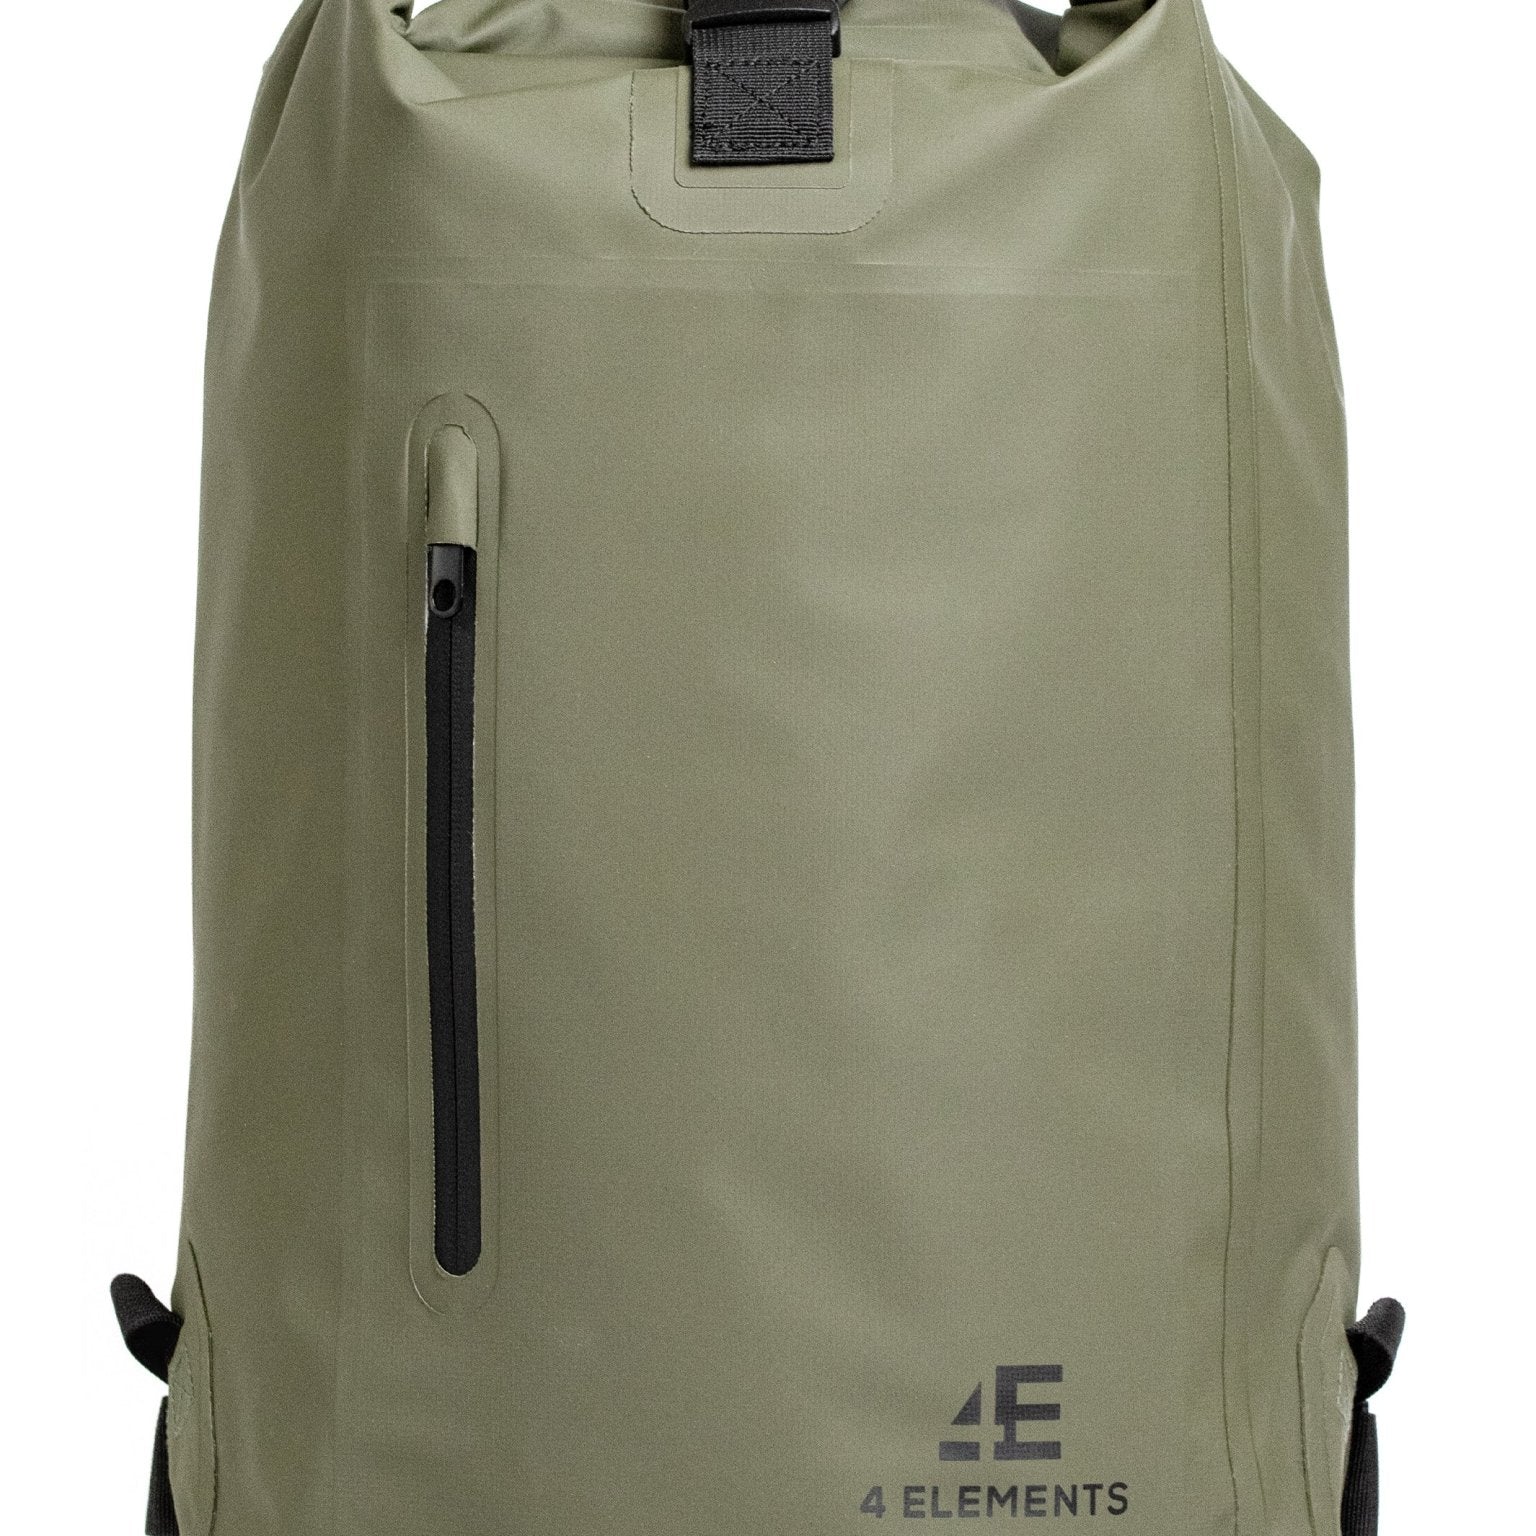 4elementsclothing4 Elements Clothing4 Elements - Waterproof bag and Dry Bag Roll Top waterproof Rucksack, Wet bag & Hiking, waters sports or camping bag, 30L drybagBag4EC-DBG30-GN